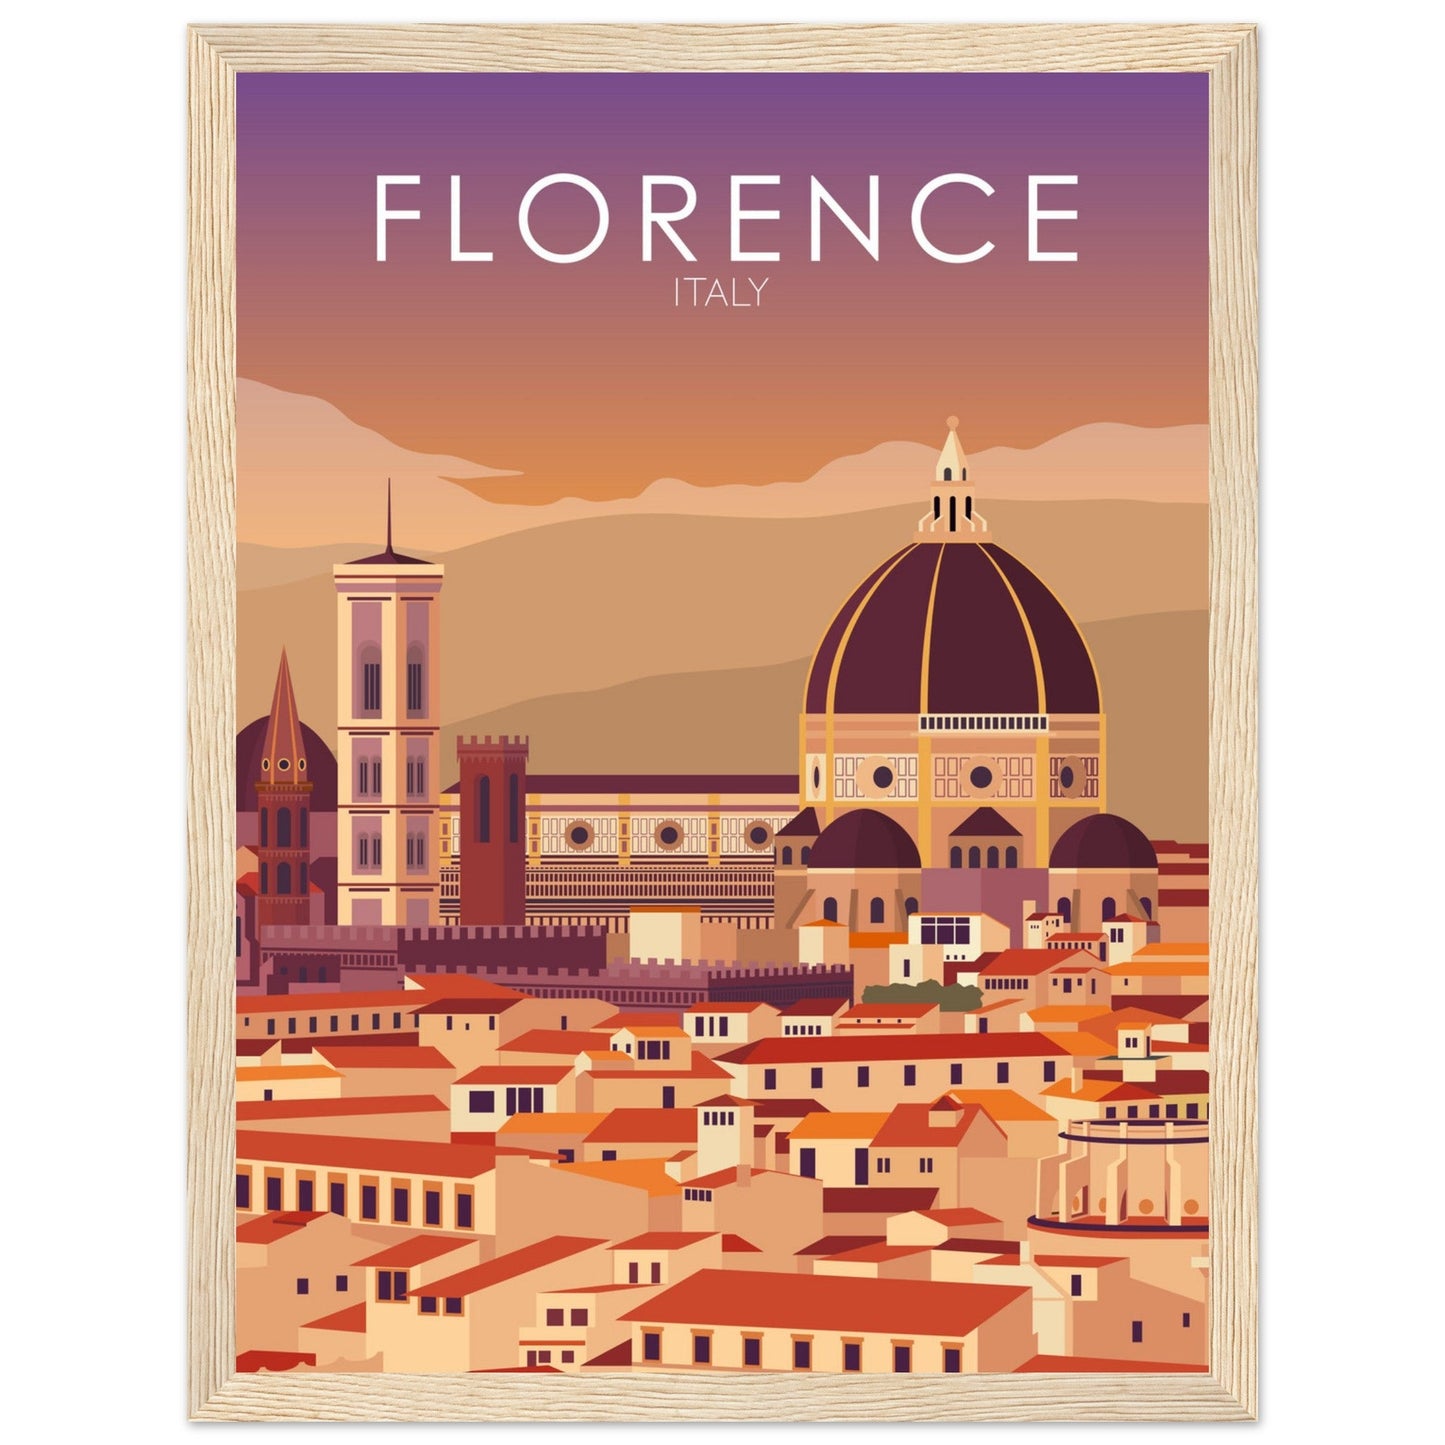 Florence Poster | Florence Wall Art | Florence Sunset Print